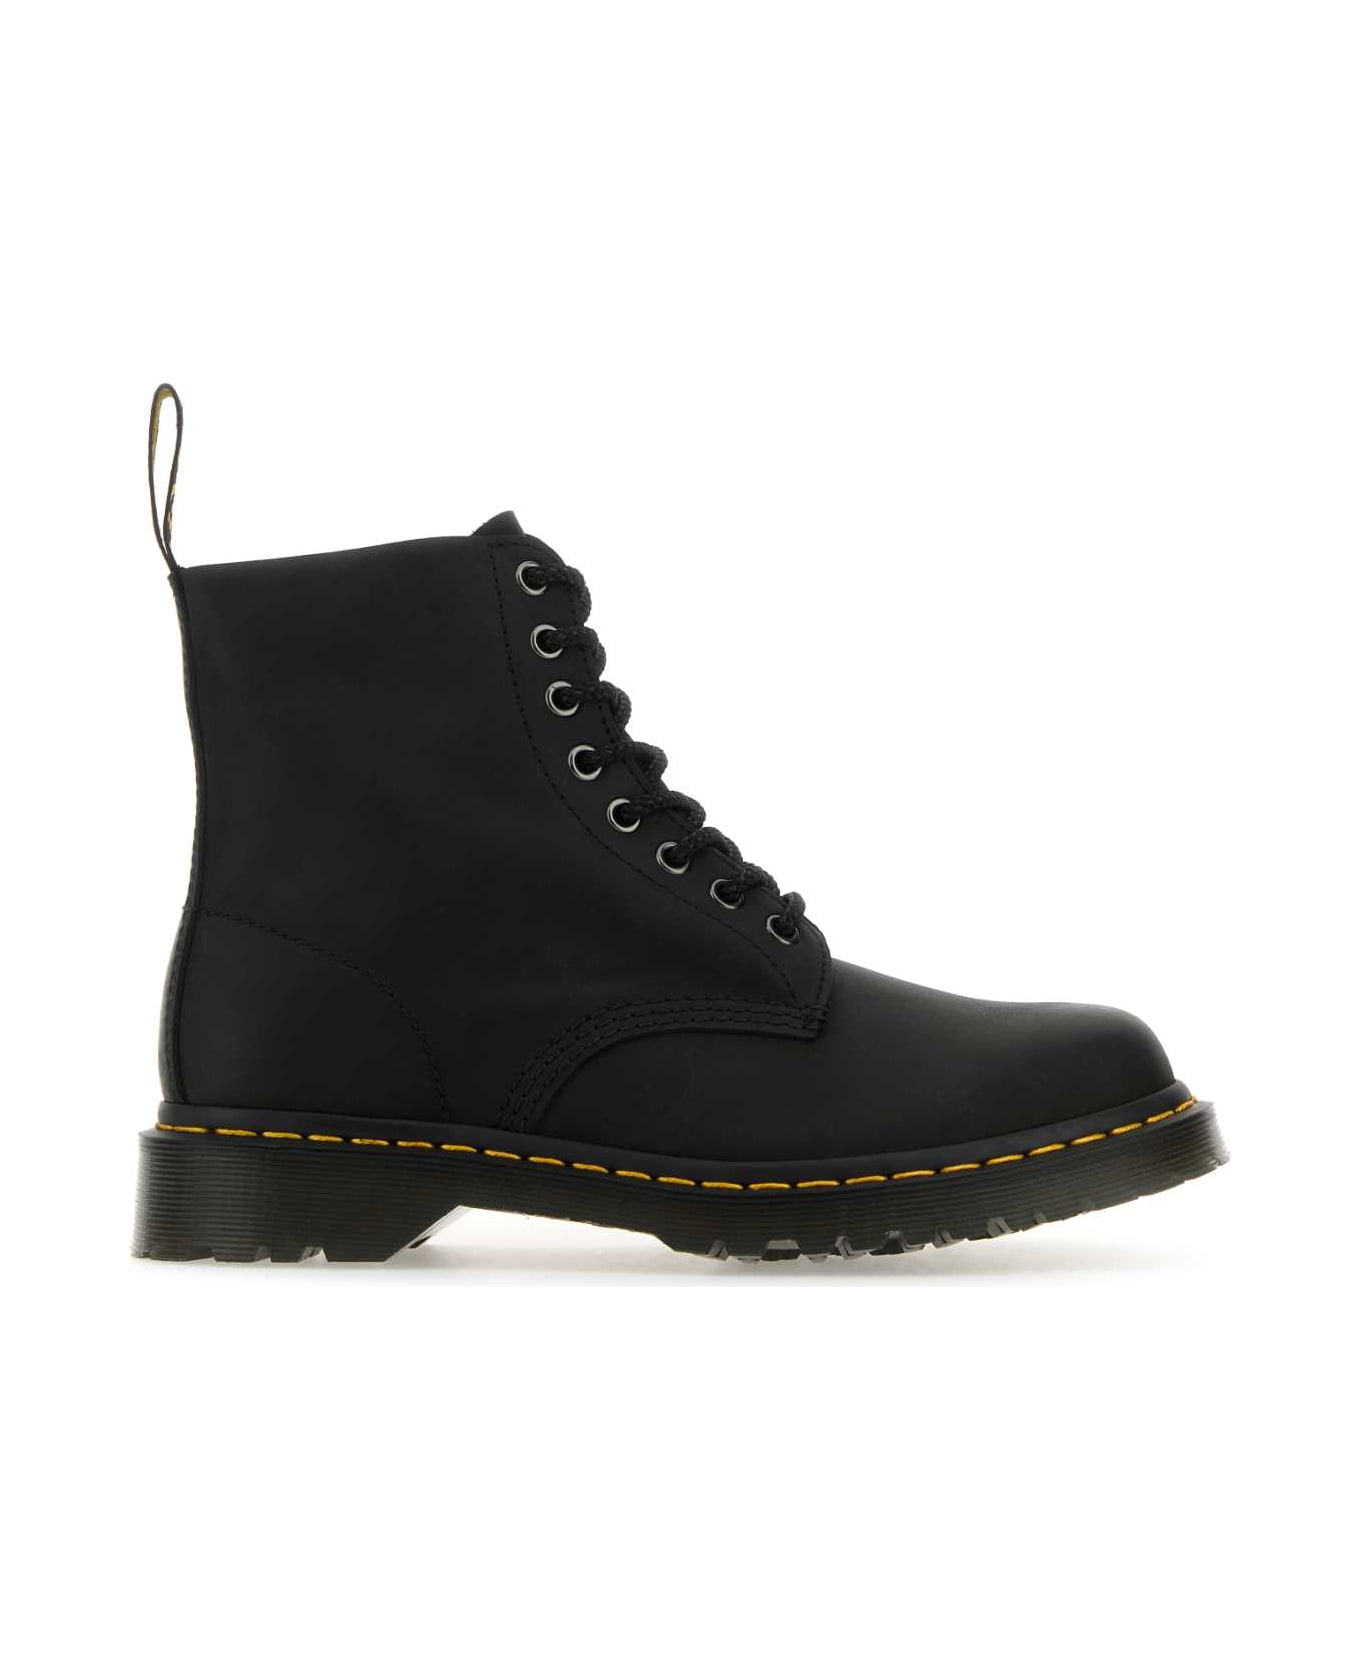 Dr. Martens Black Leather 1460 Ankle Boots - 1460PASCALBLAC